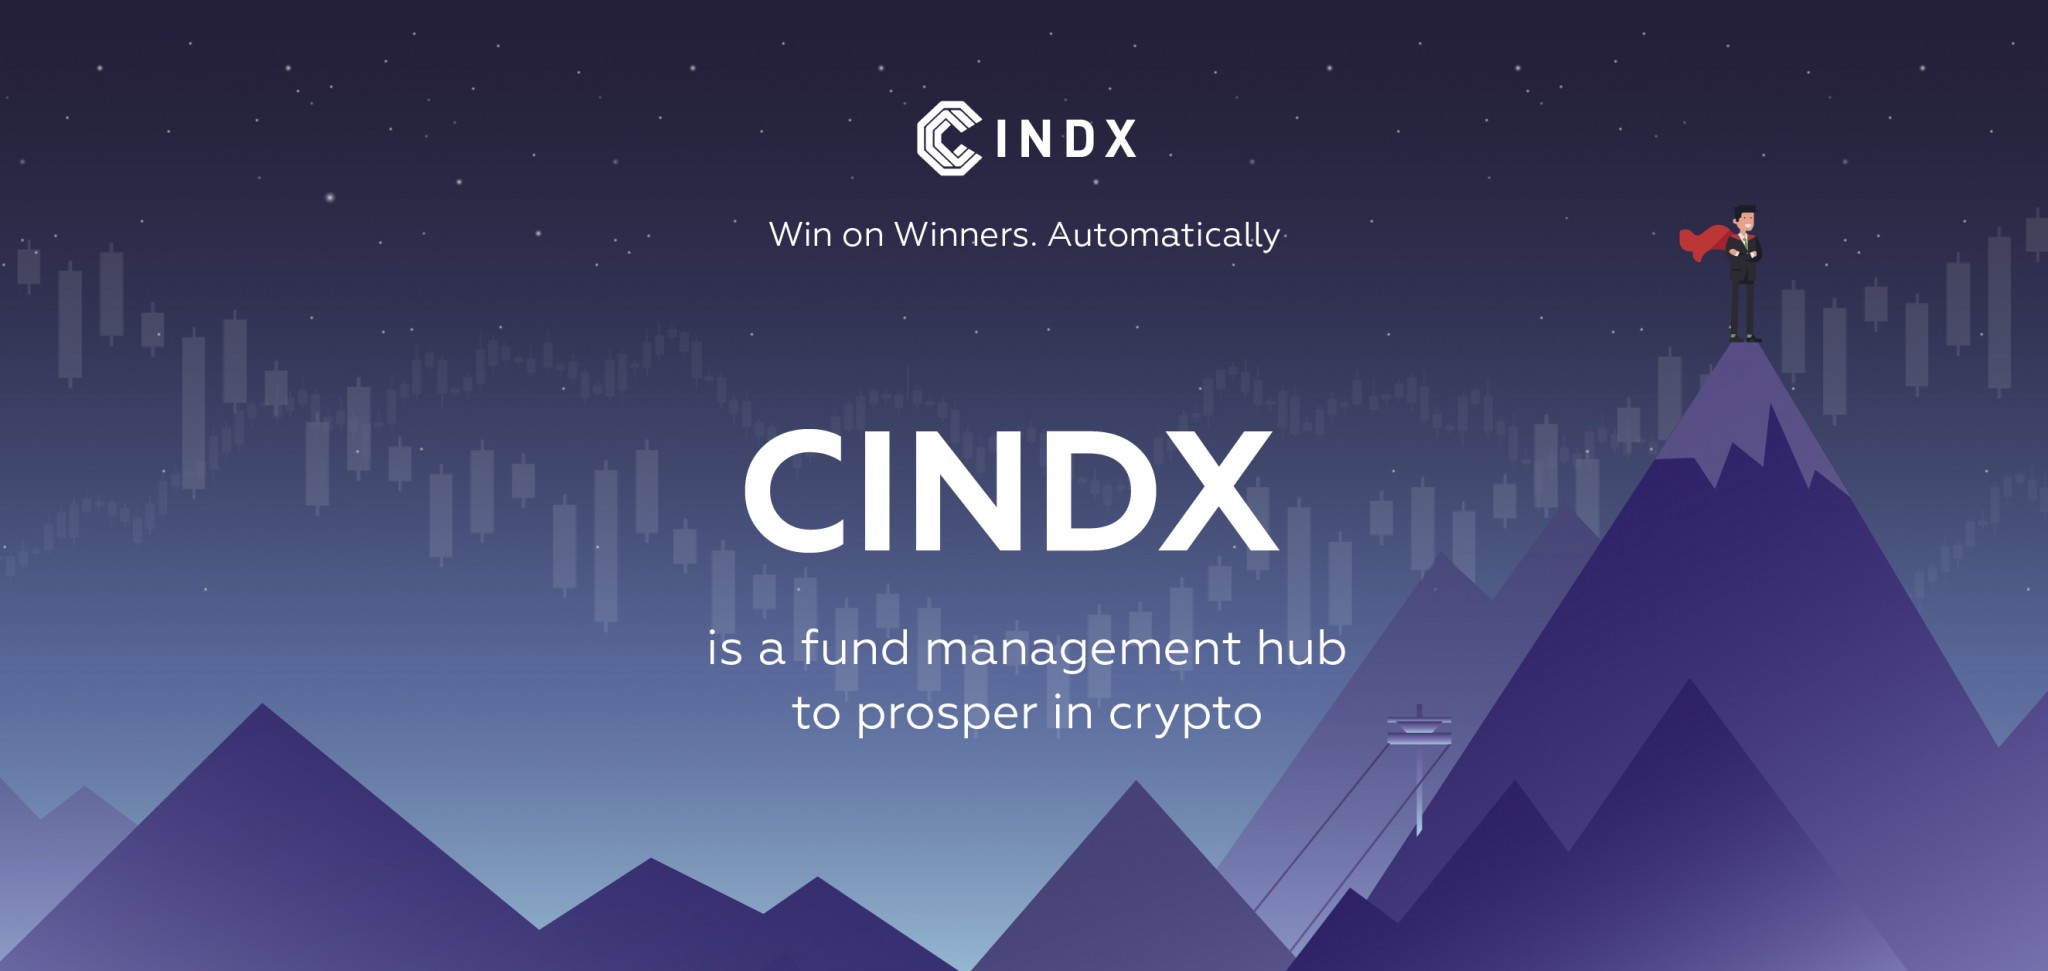 CINDX